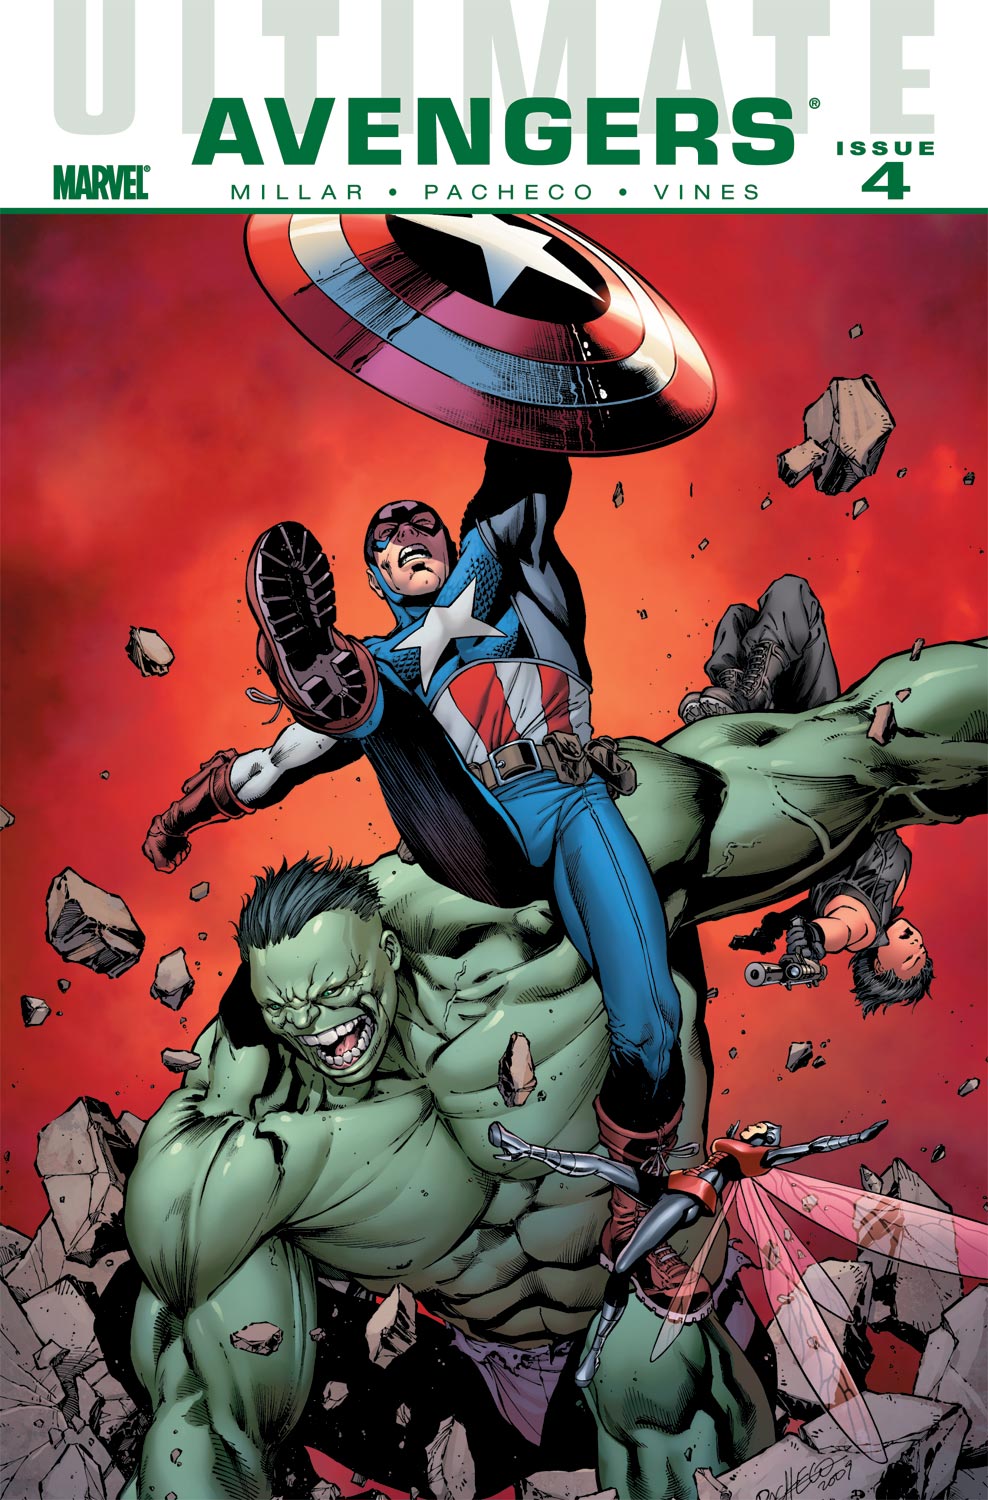 Ultimate Avengers (2009) #4